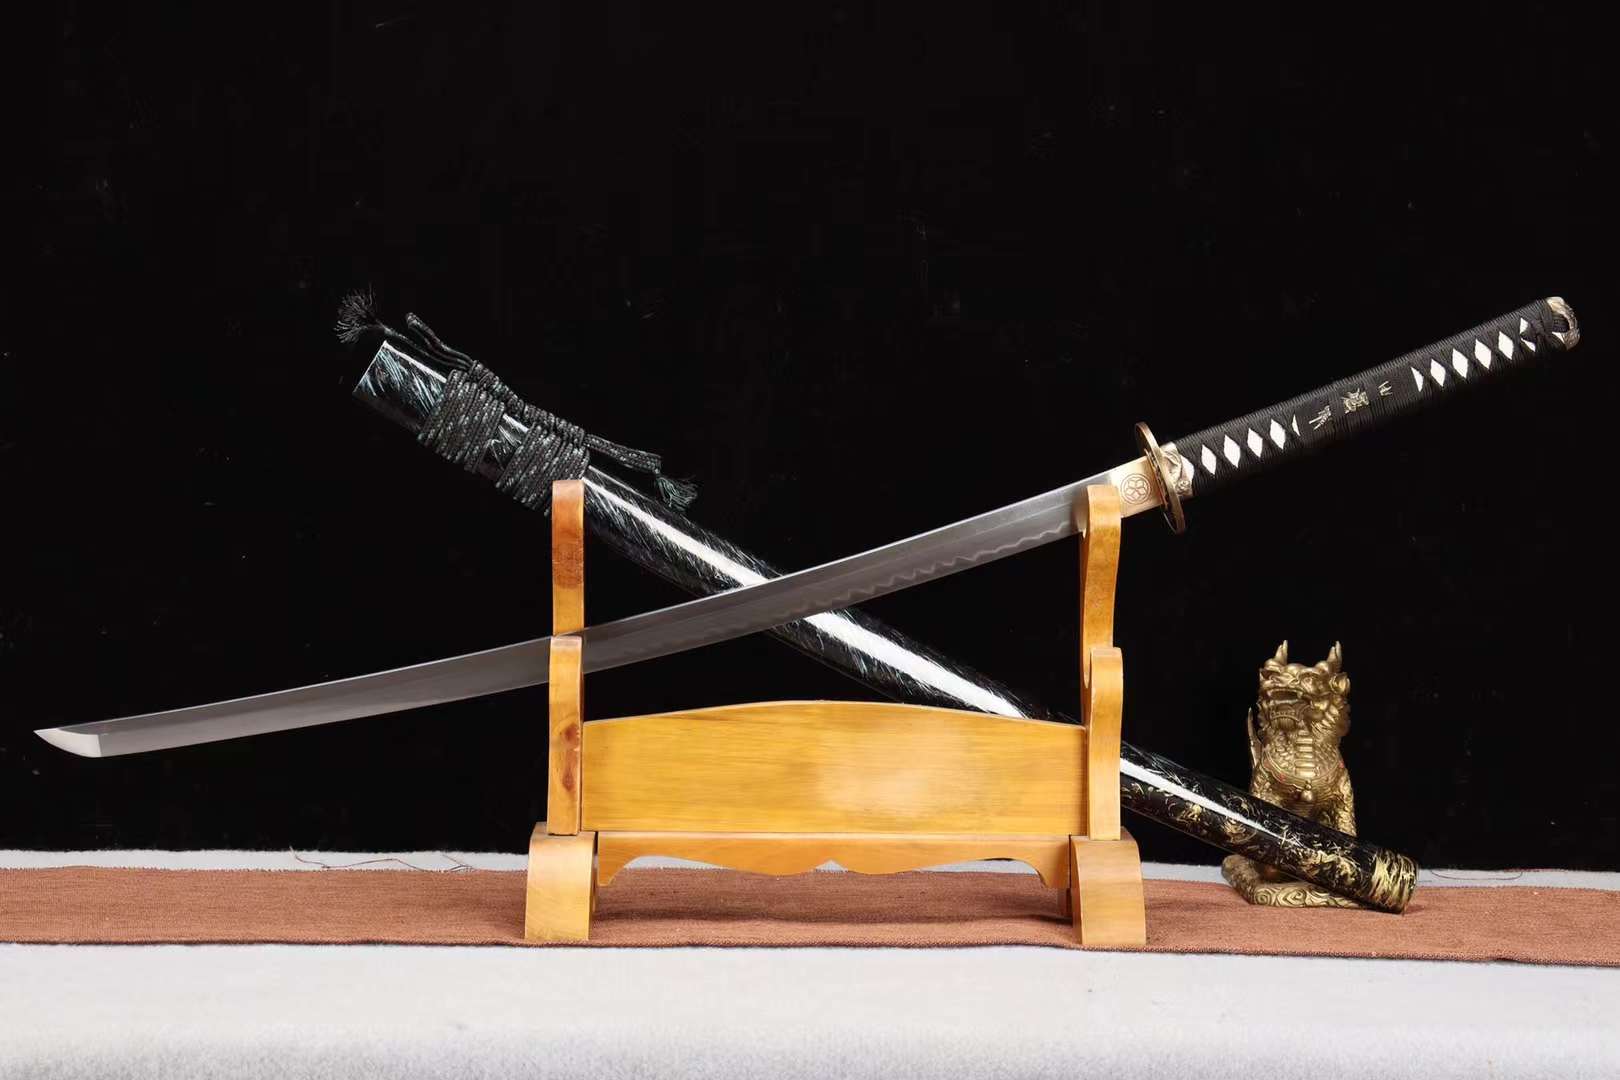 Handmade Japanese Sword Sharp Full Tang T10 Steel Tiger Samurai Sword Clay Burning Blade Katana loveyitadj